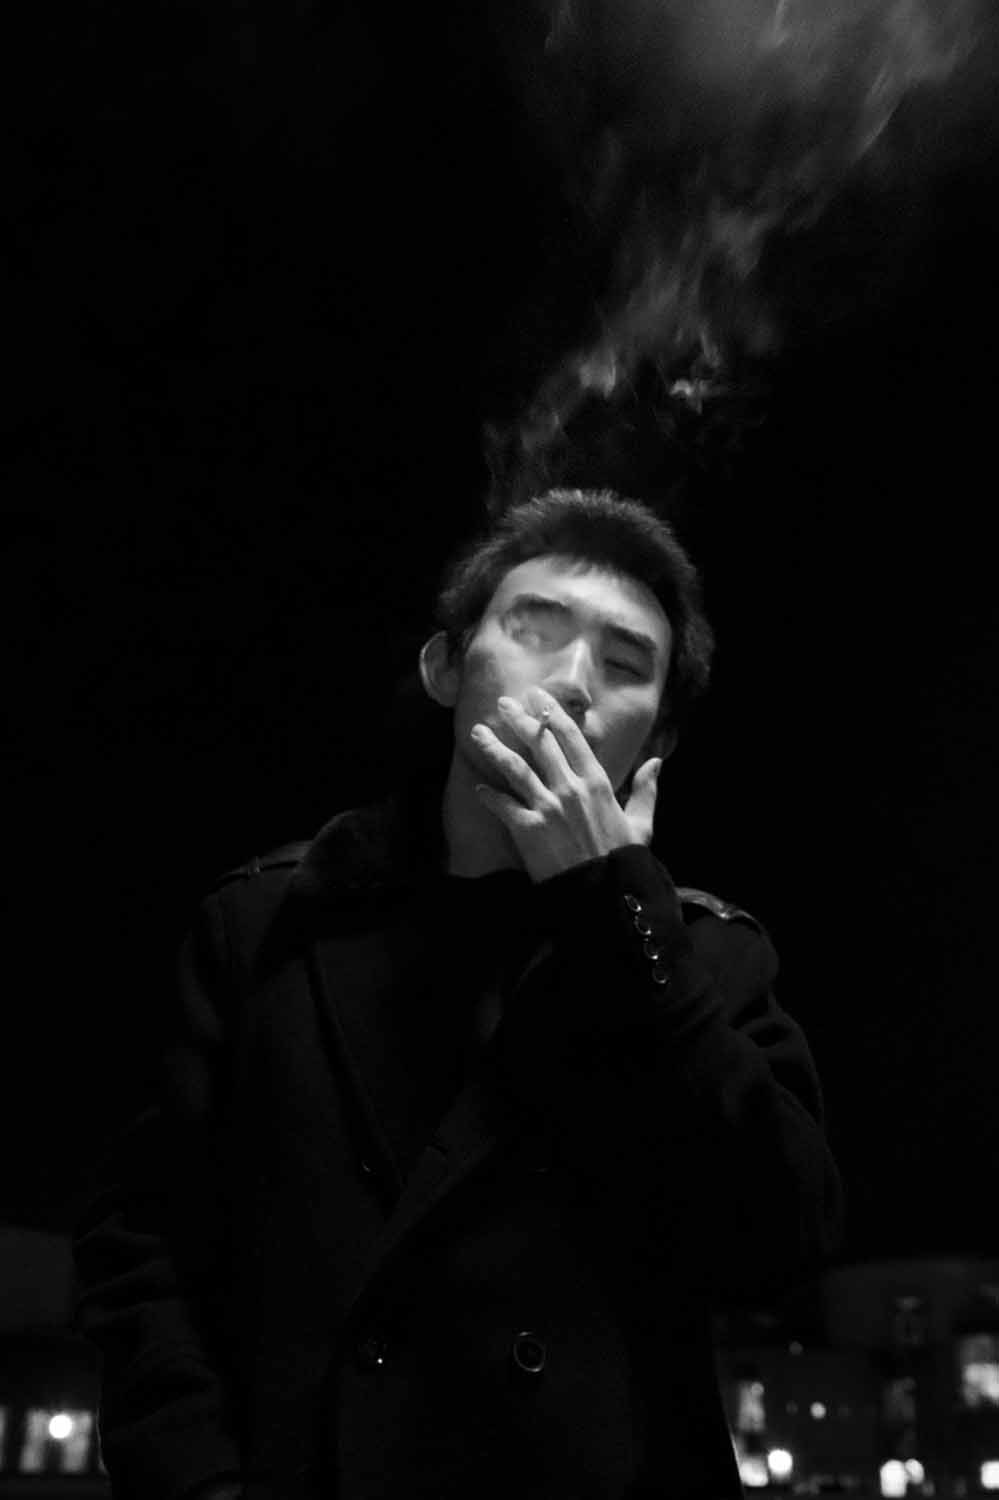 man smoking cigarette, bw photo with dark background